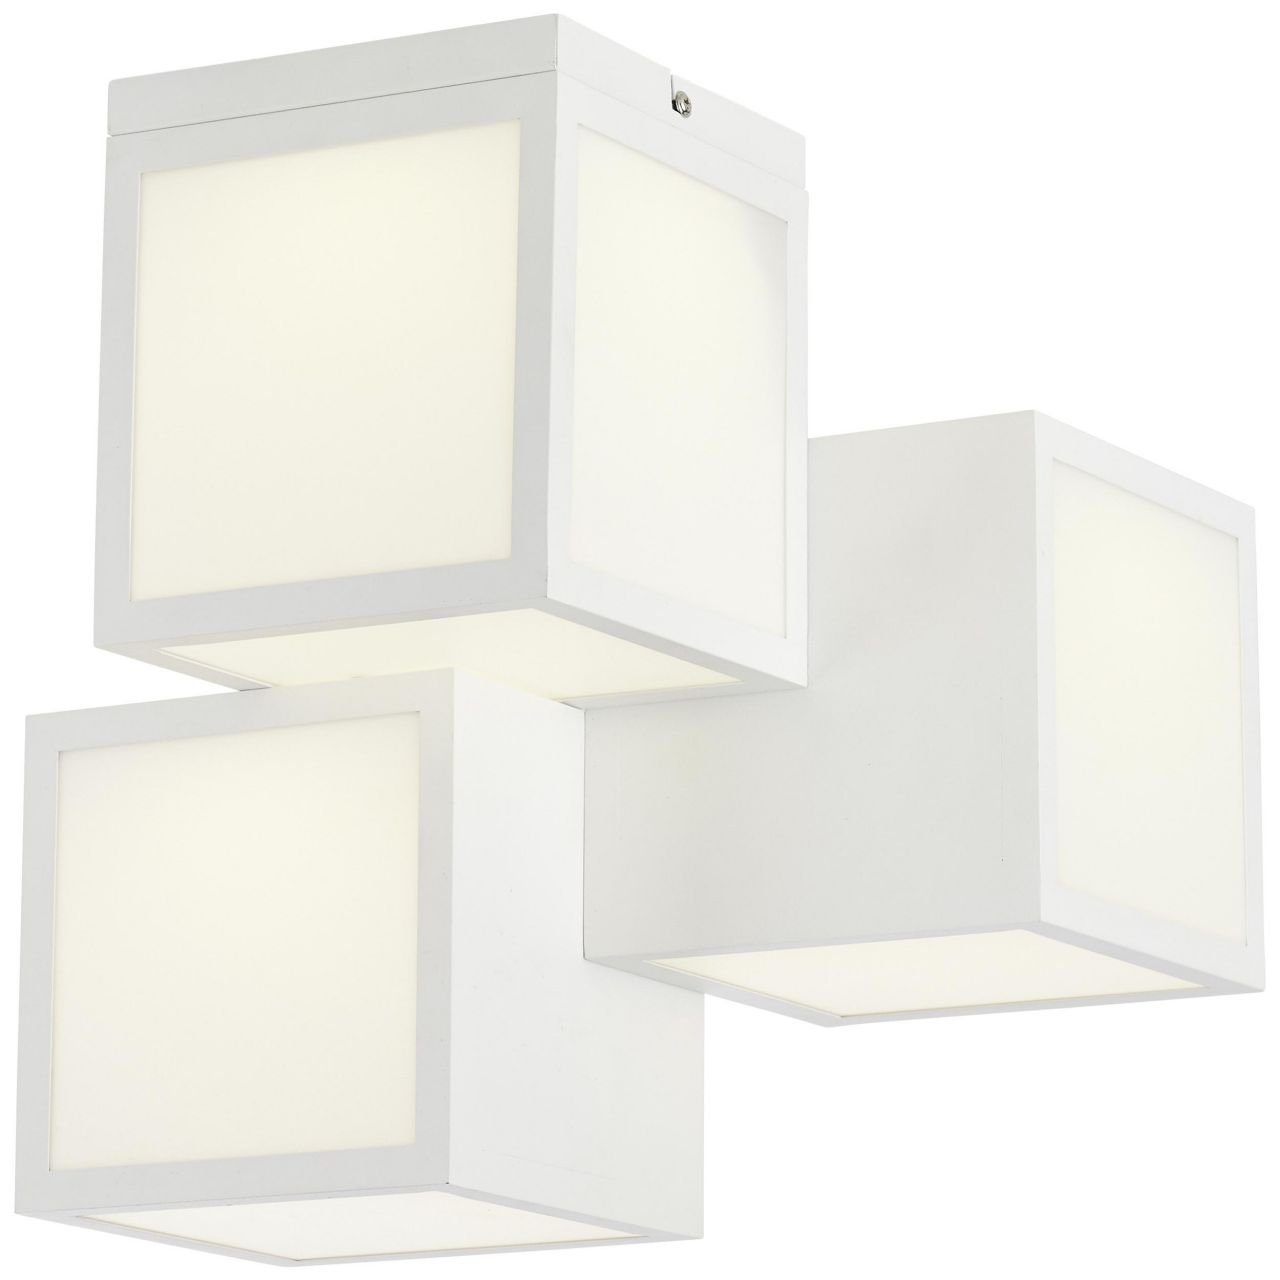 Brilliant Deckenleuchte Cubix, 3000K, Lampe, Cubix LED Deckenleuchte 3flg  weiß, Metall/Kunststoff, 1x 25W LE | Alle Lampen